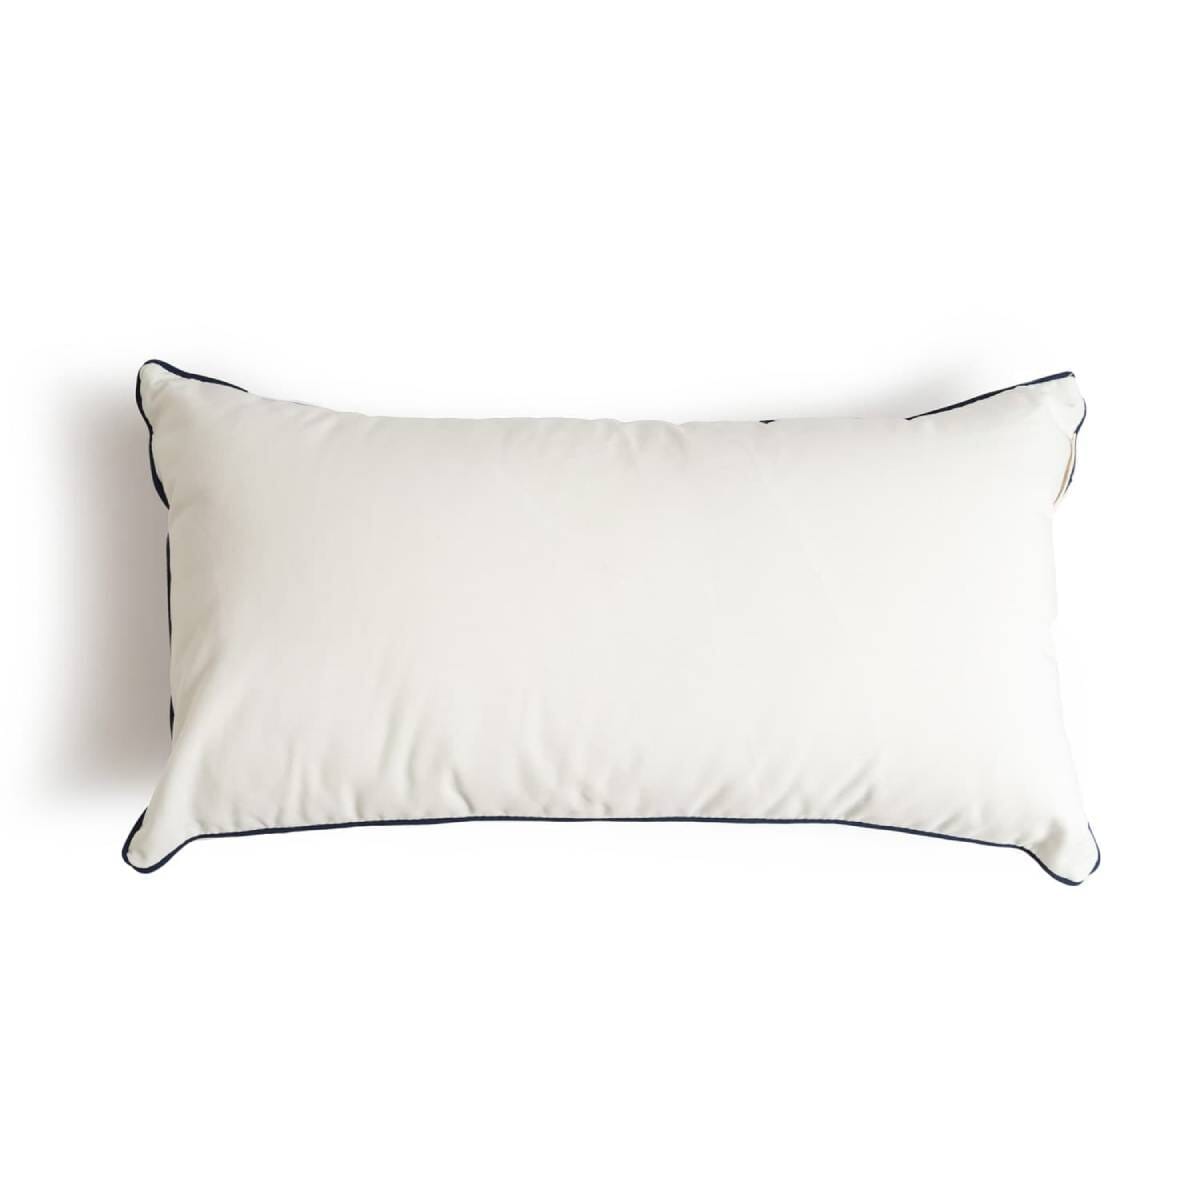 White Rectangular Throw Pillow in Studio